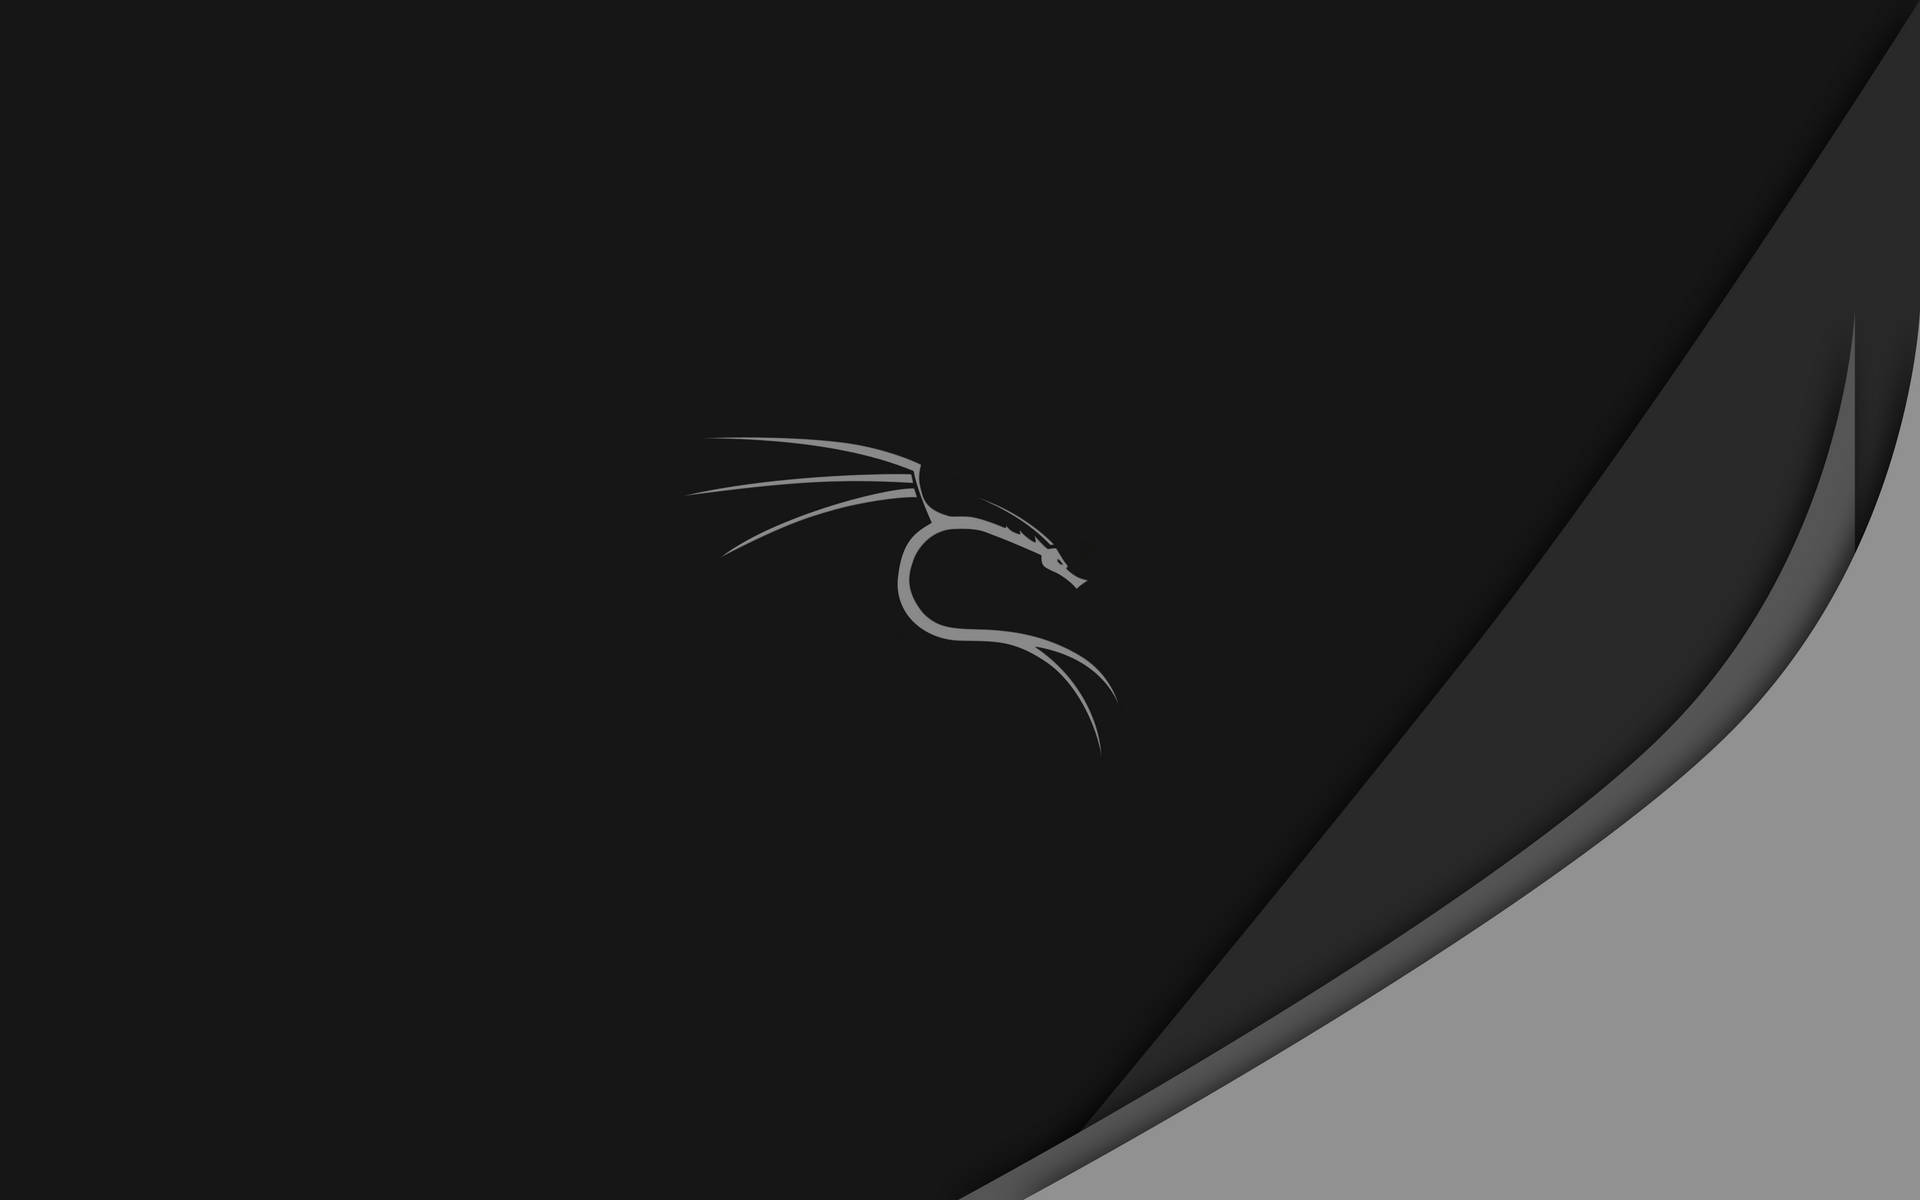 Classic Kali Linux Logo Background